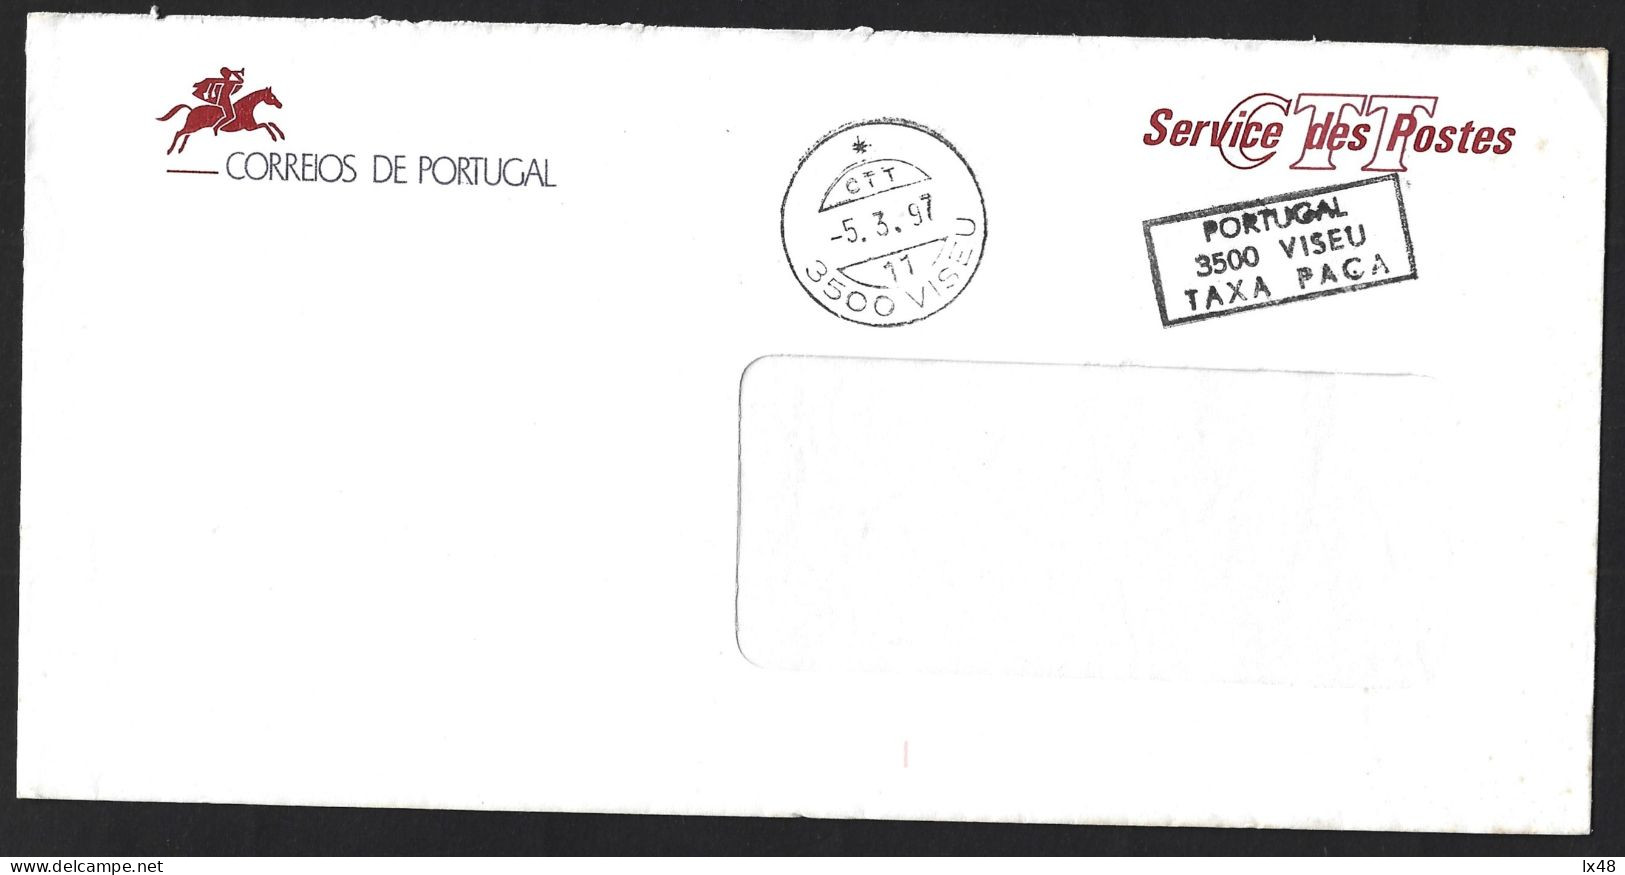 Carta Dos Correios Com Marcas De 'Taxa Paga, Viseu'. Rare. Letter From The Post Office Marked 'Tax Paid, Viseu'. Rare. - Lettres & Documents